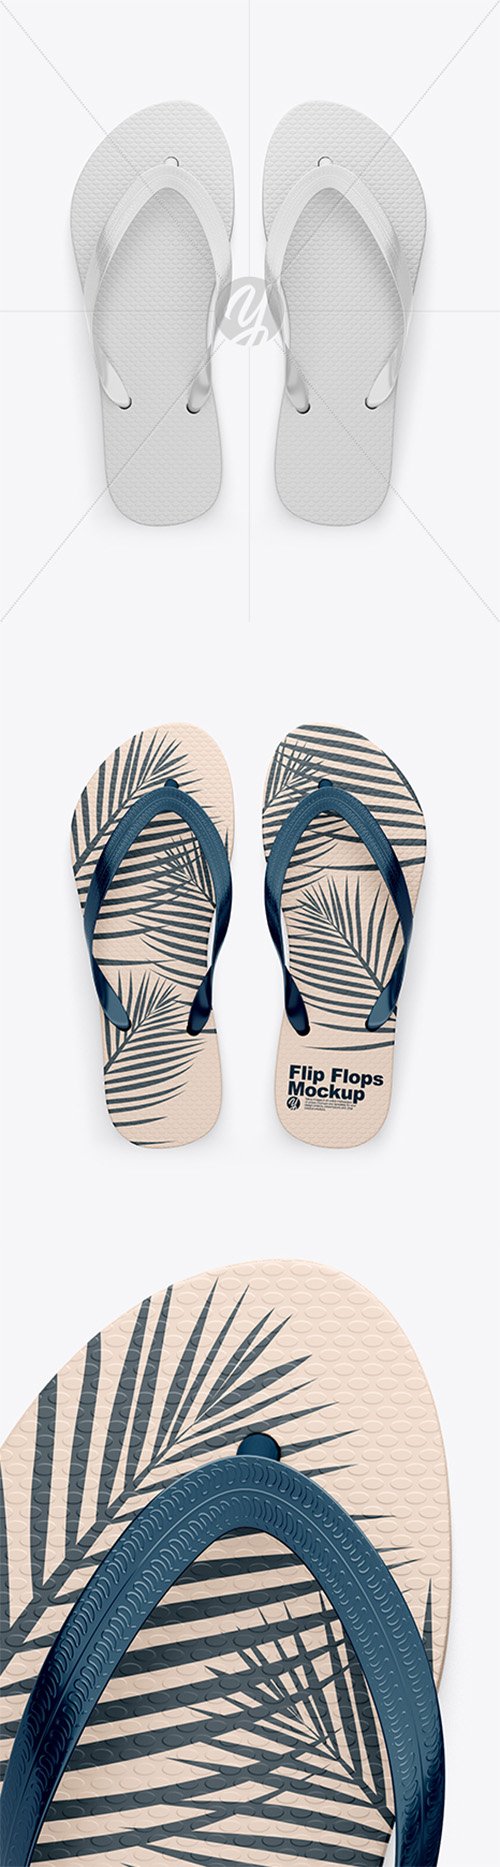 Flip Flops Mockup - Top View 28288 TIF